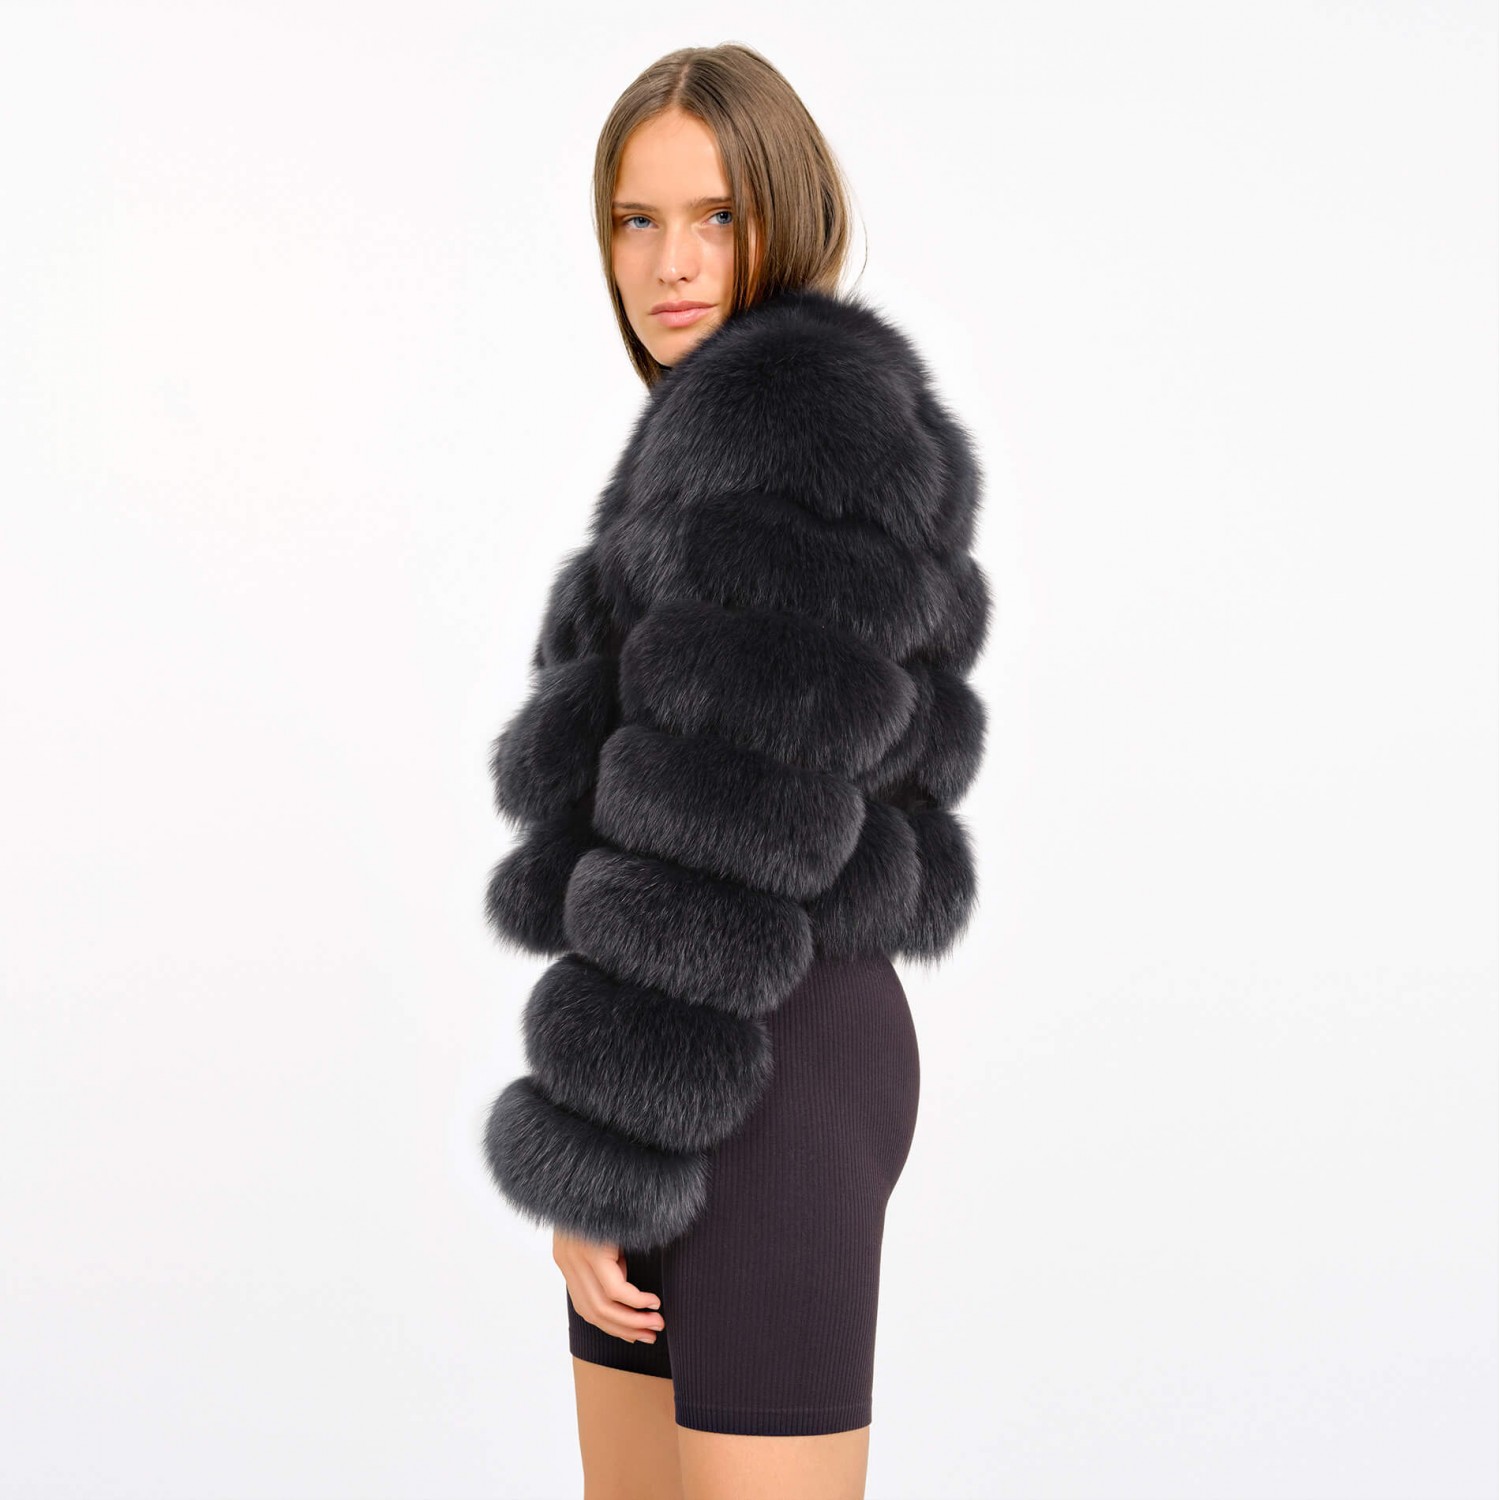 Cropped black fur jacket